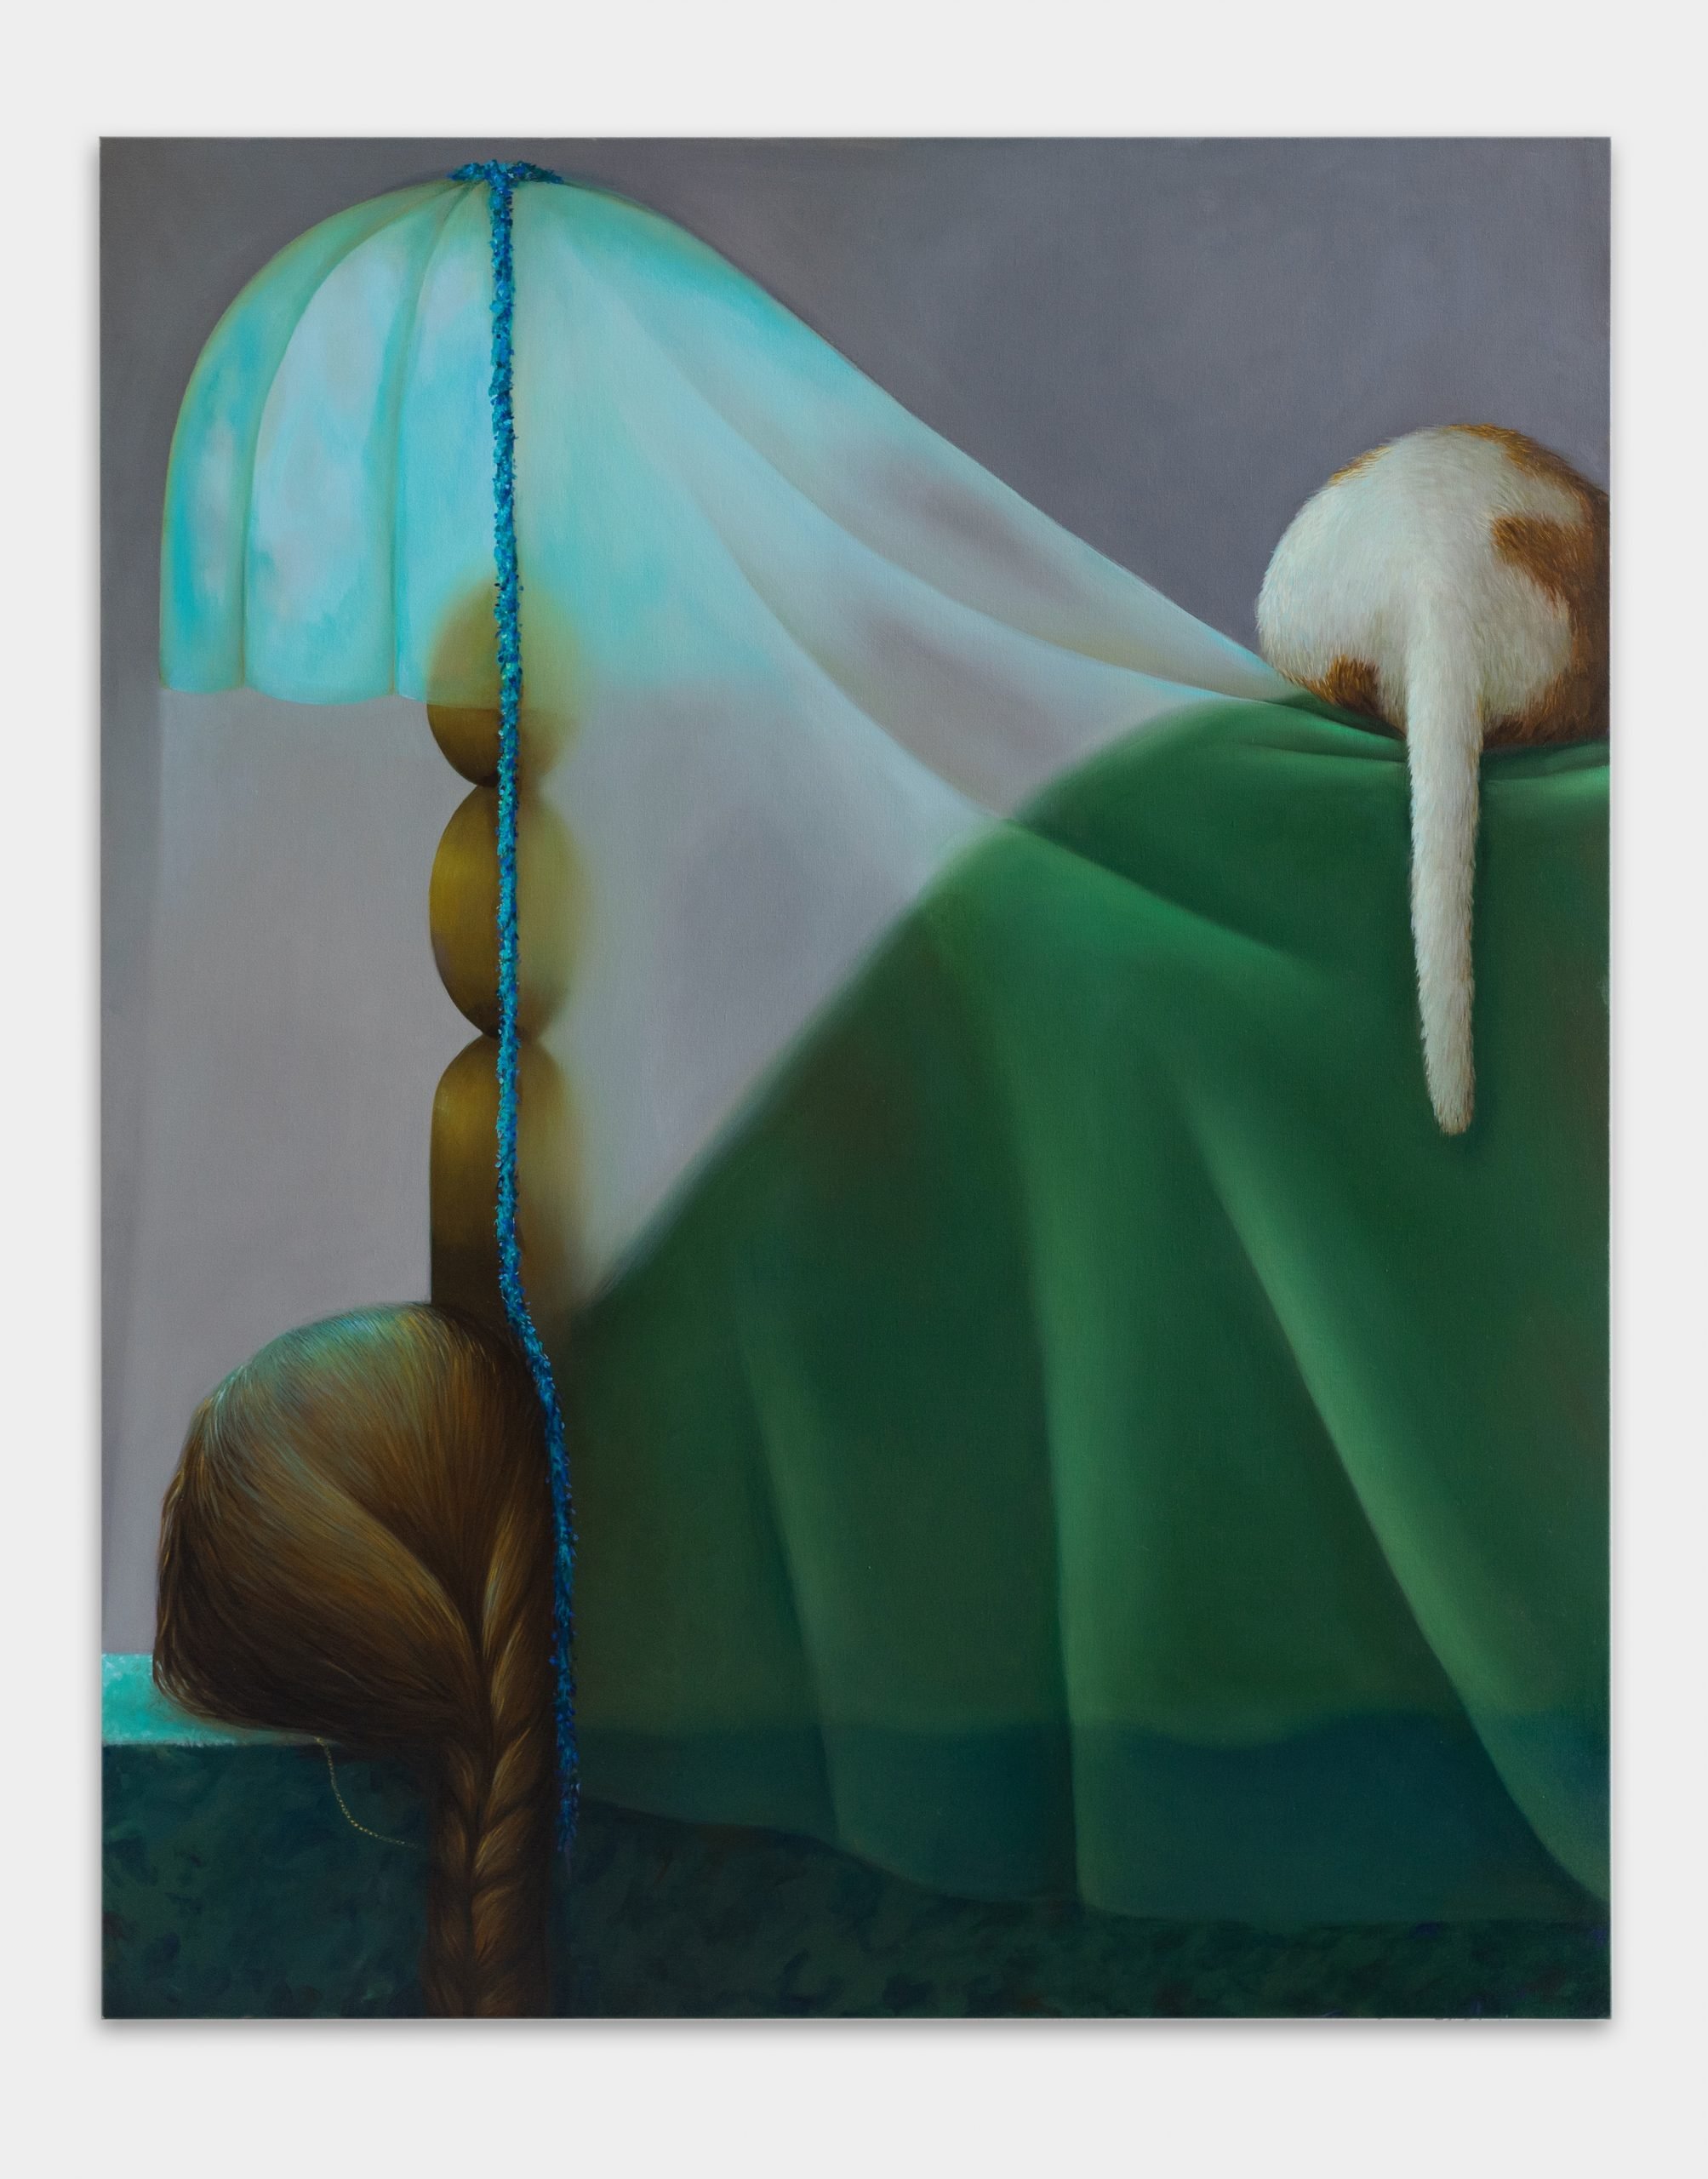 Emerging Artist Diane Dal-Pra's Cushiony Paintings of Women Blend